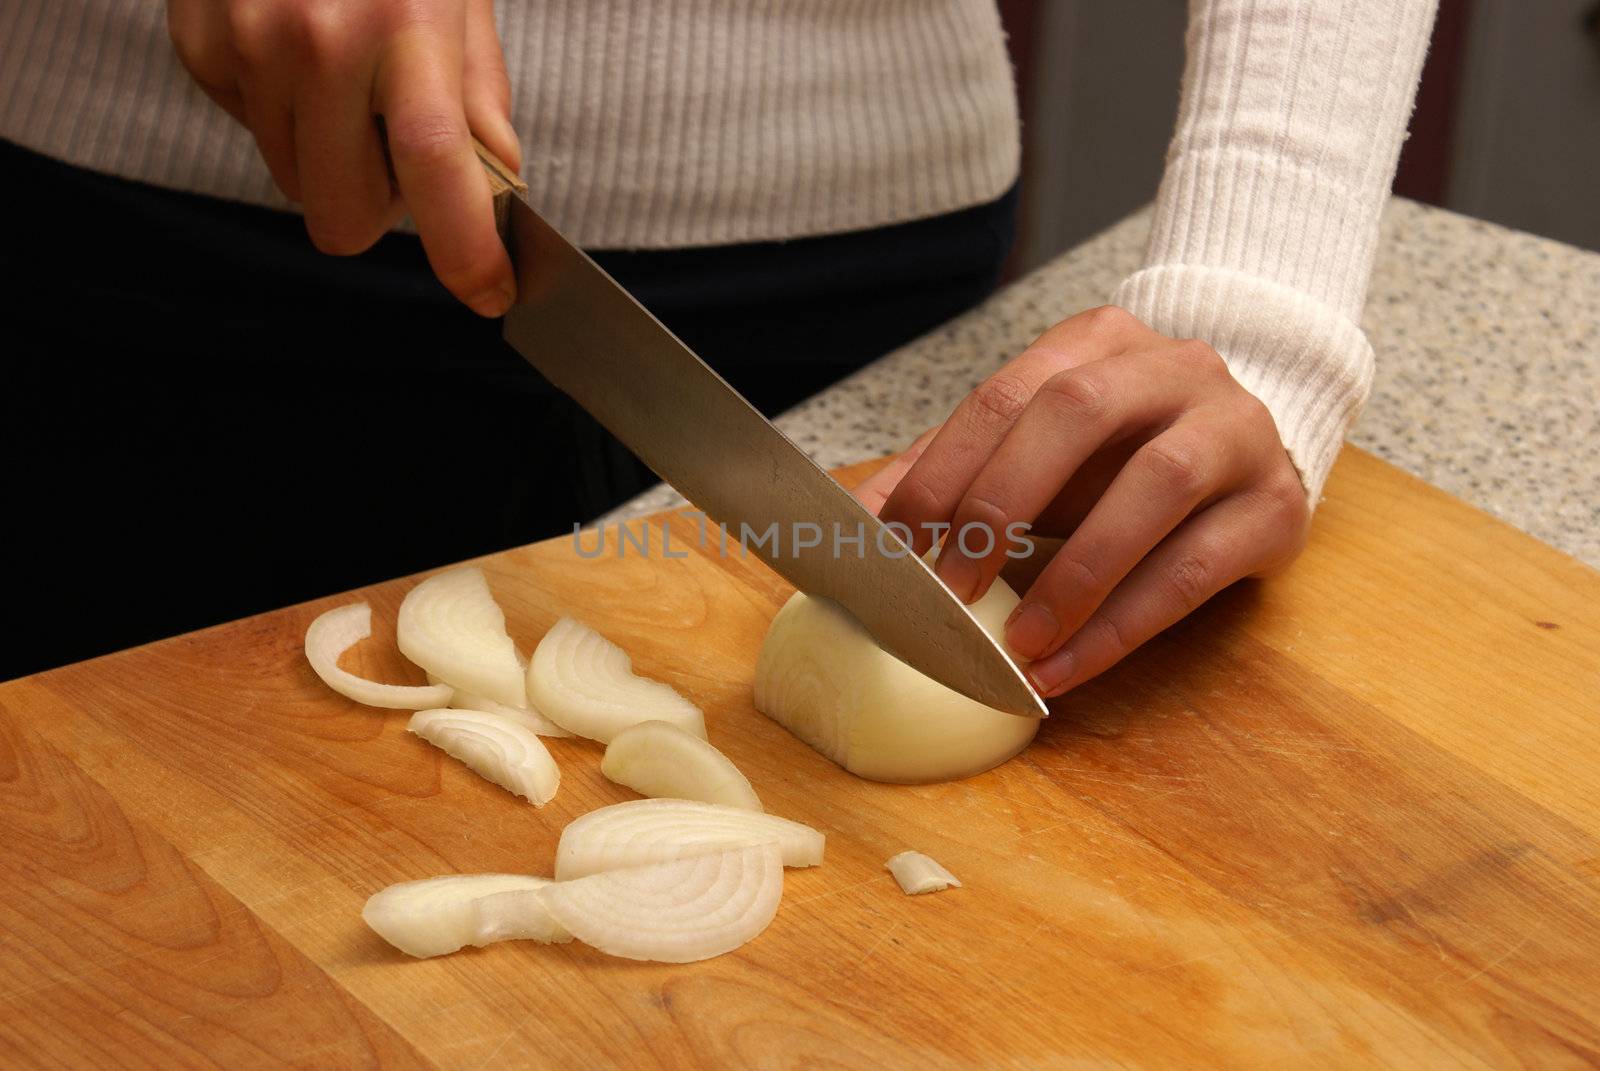 A woman chopping an onion on a cutting board.